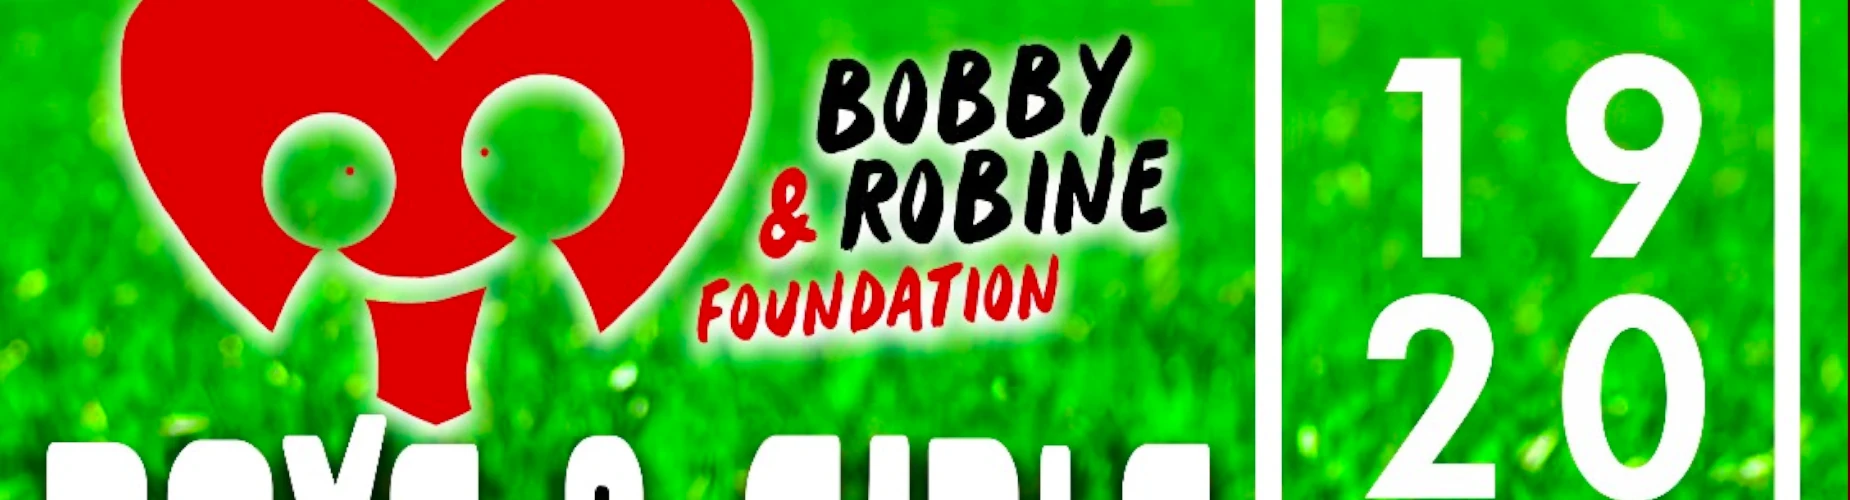 Banner - Bobby & Robine Foundation Boys en Girls Event - SC ’t Gooi - Hilversum